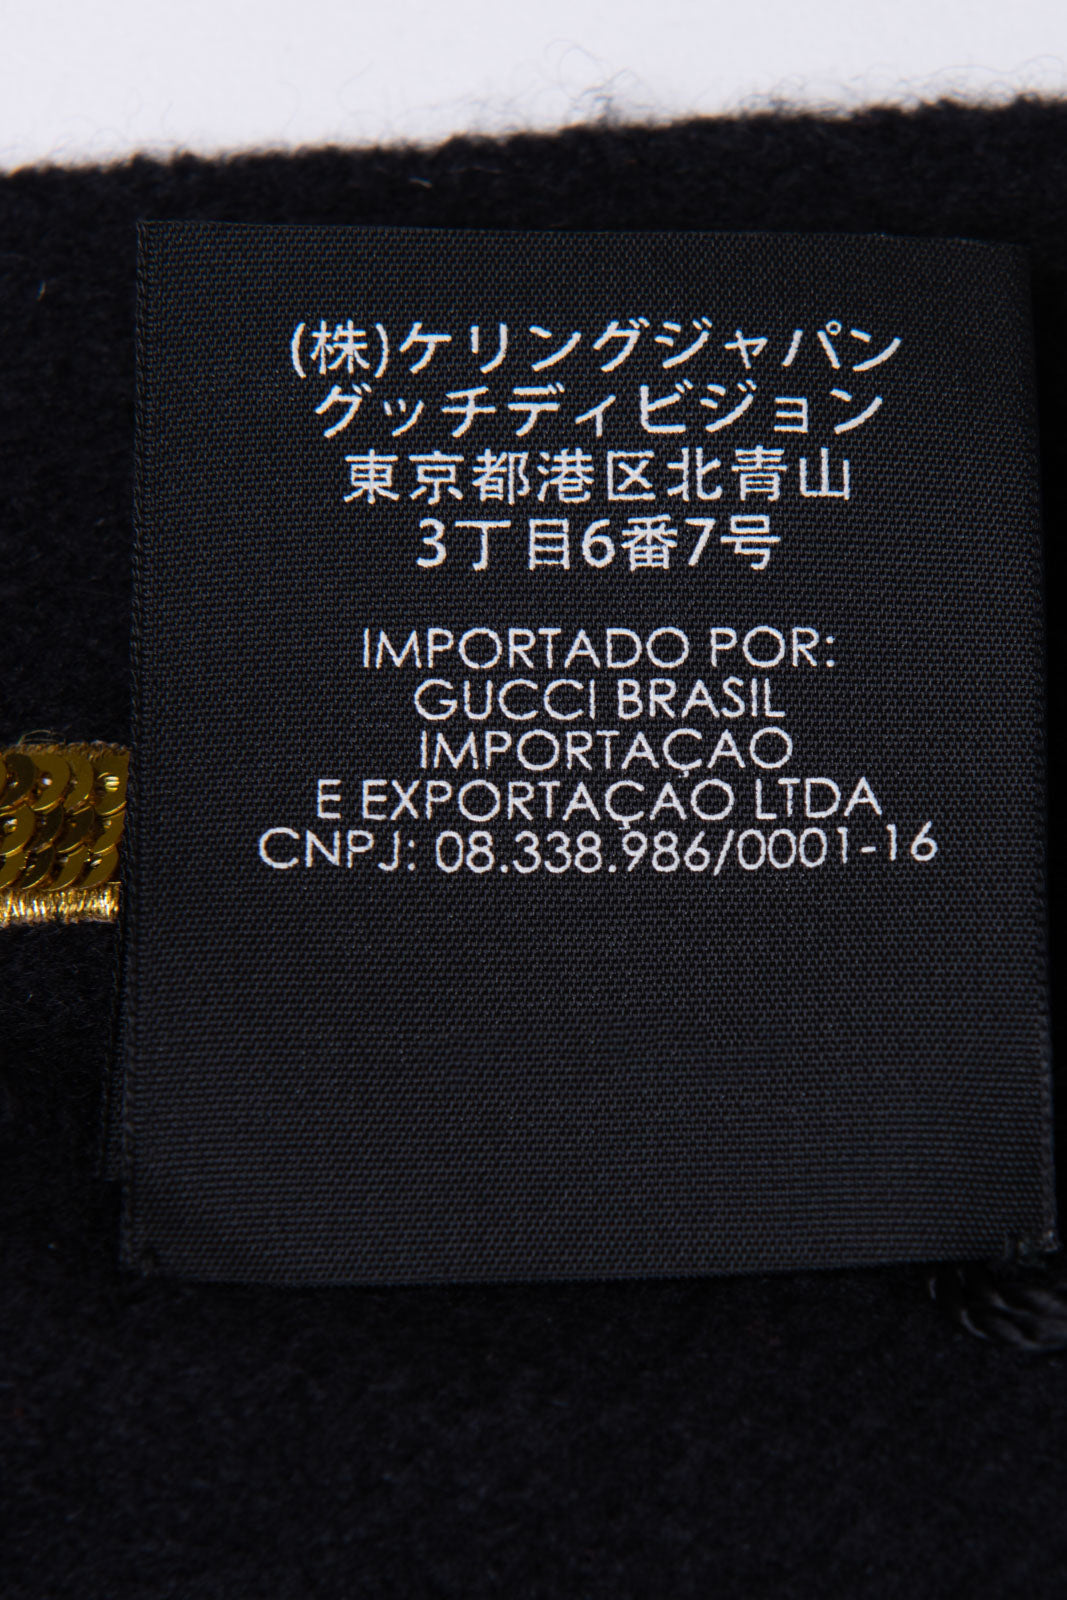 Gucci Tiger Sequined Cashmere Half Scarf in Black